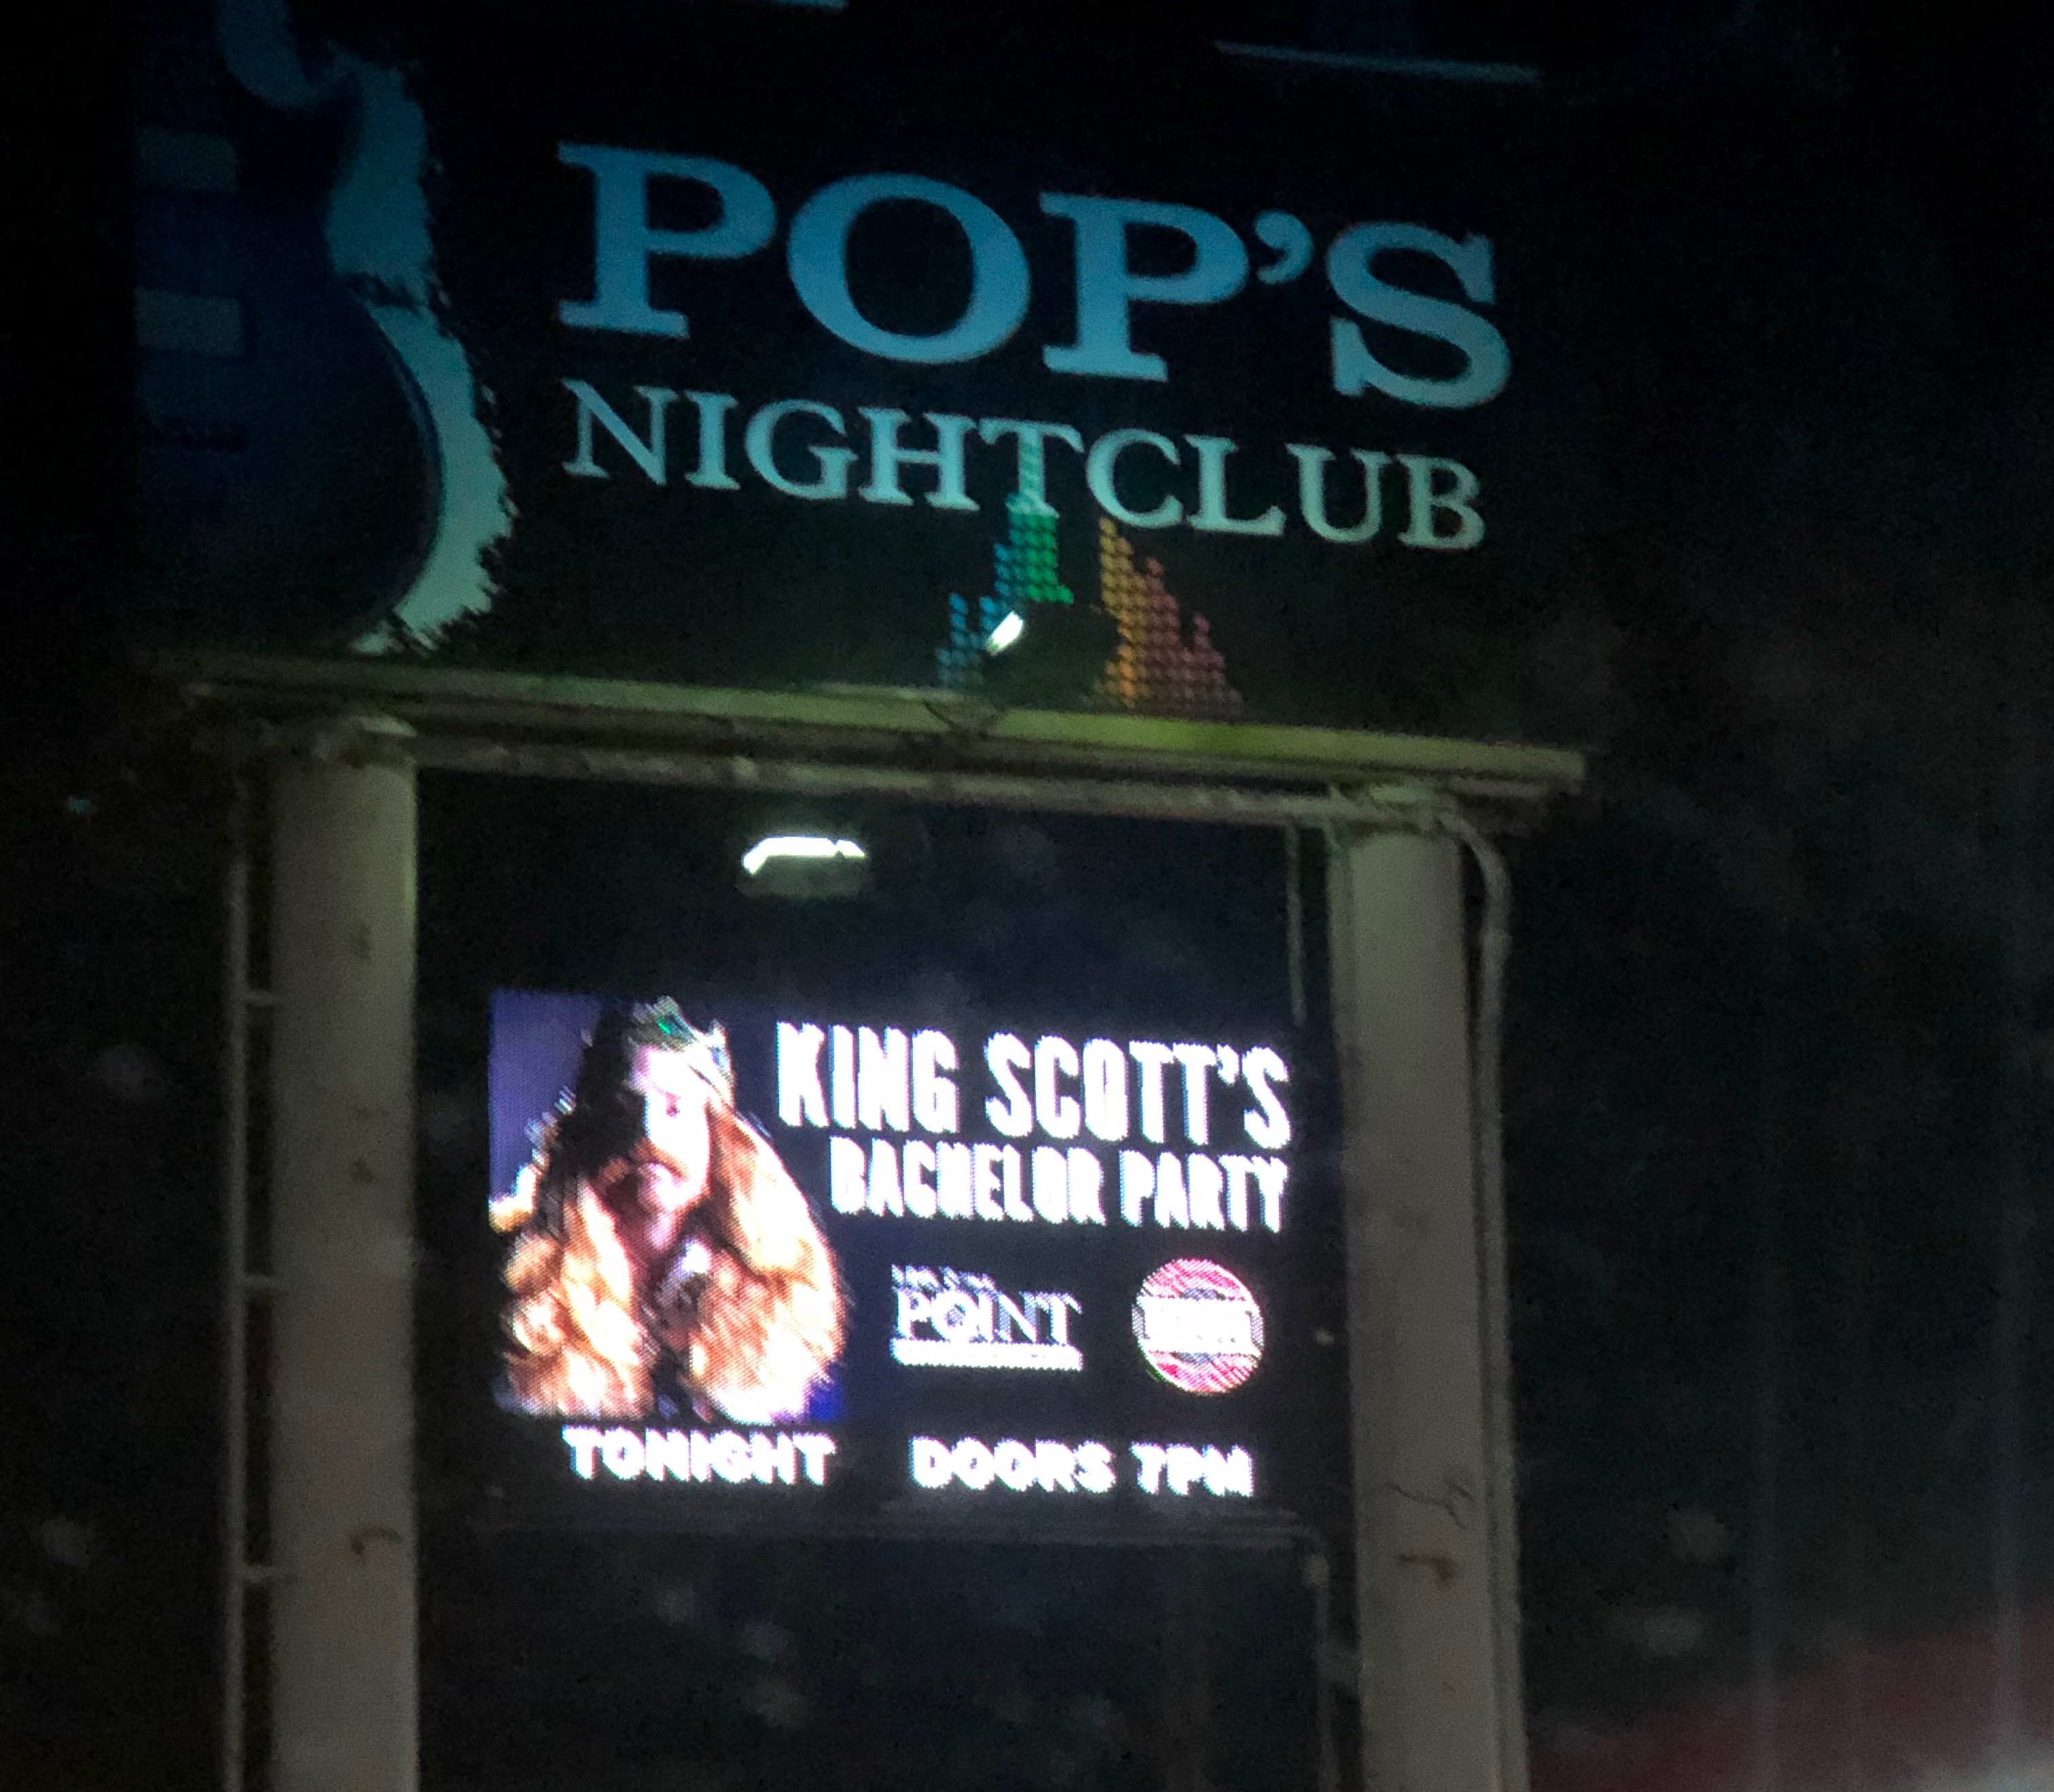 King Scott's Bachelor Party Concert at Pops